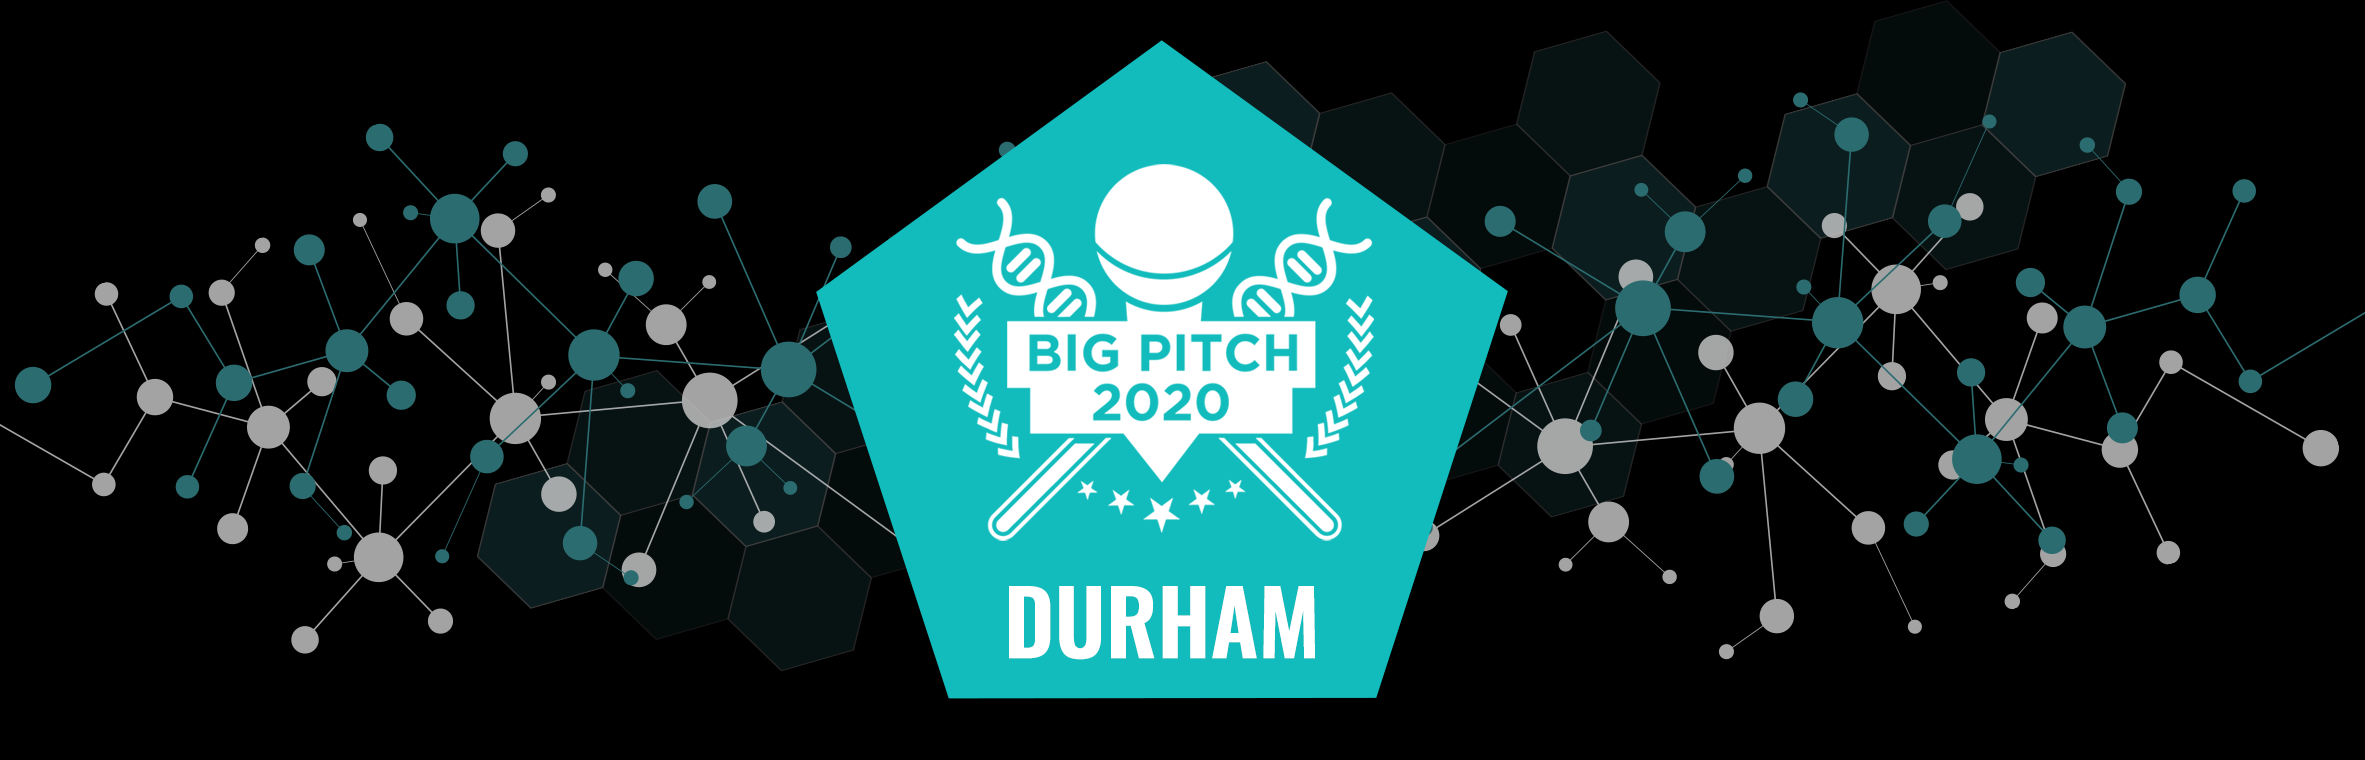 LaunchBio Big Pitch 2020 event graphic